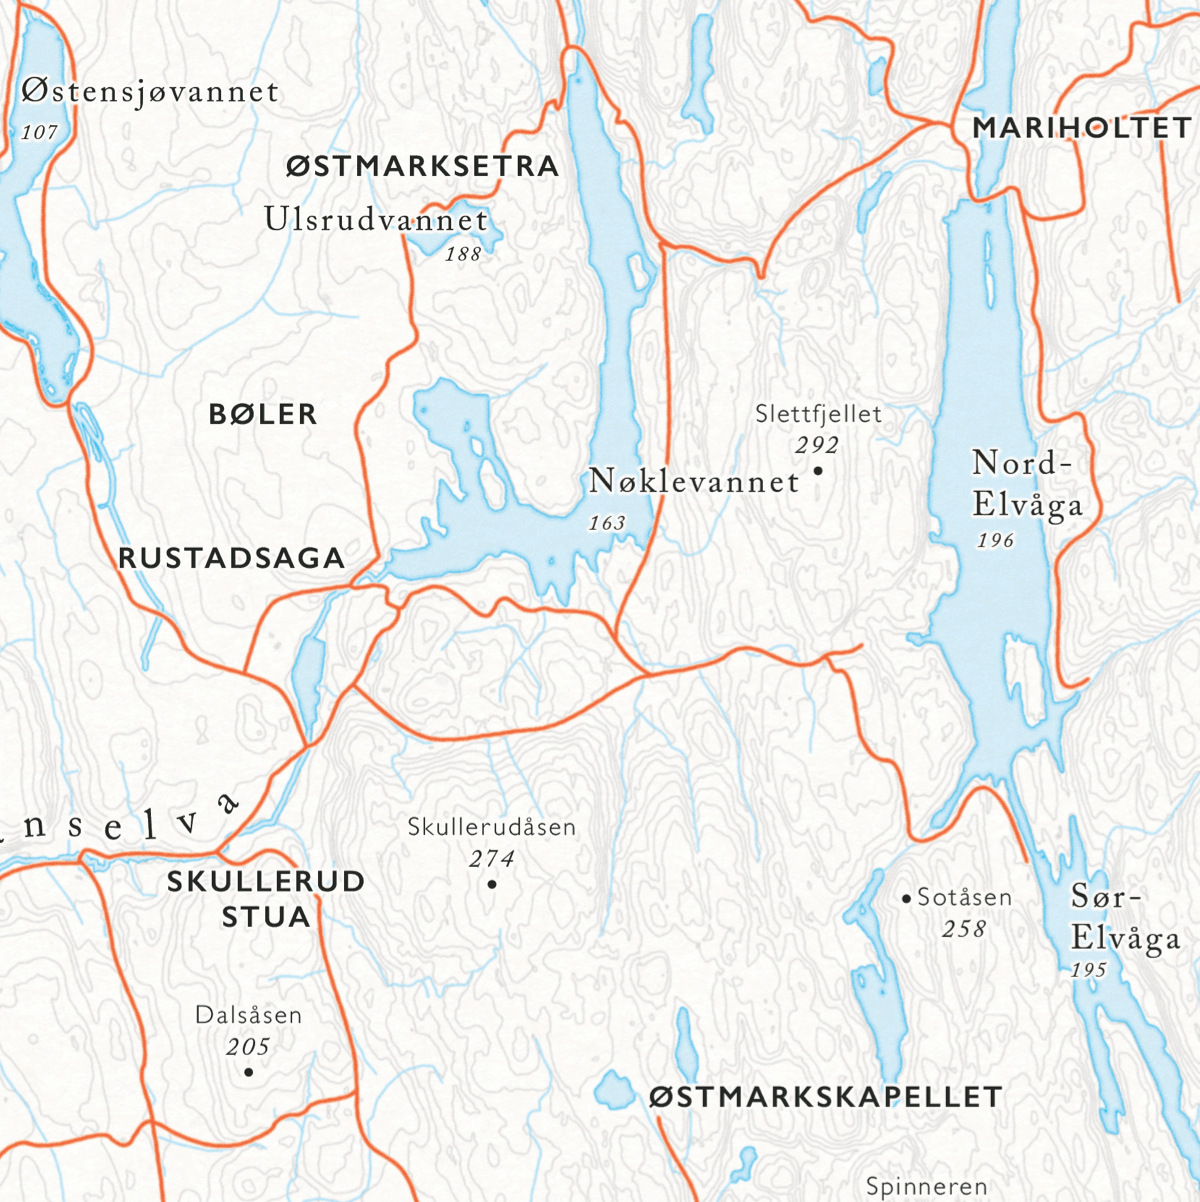 Sykkelkart Østmarka (50x70 cm) - Dapa Maps